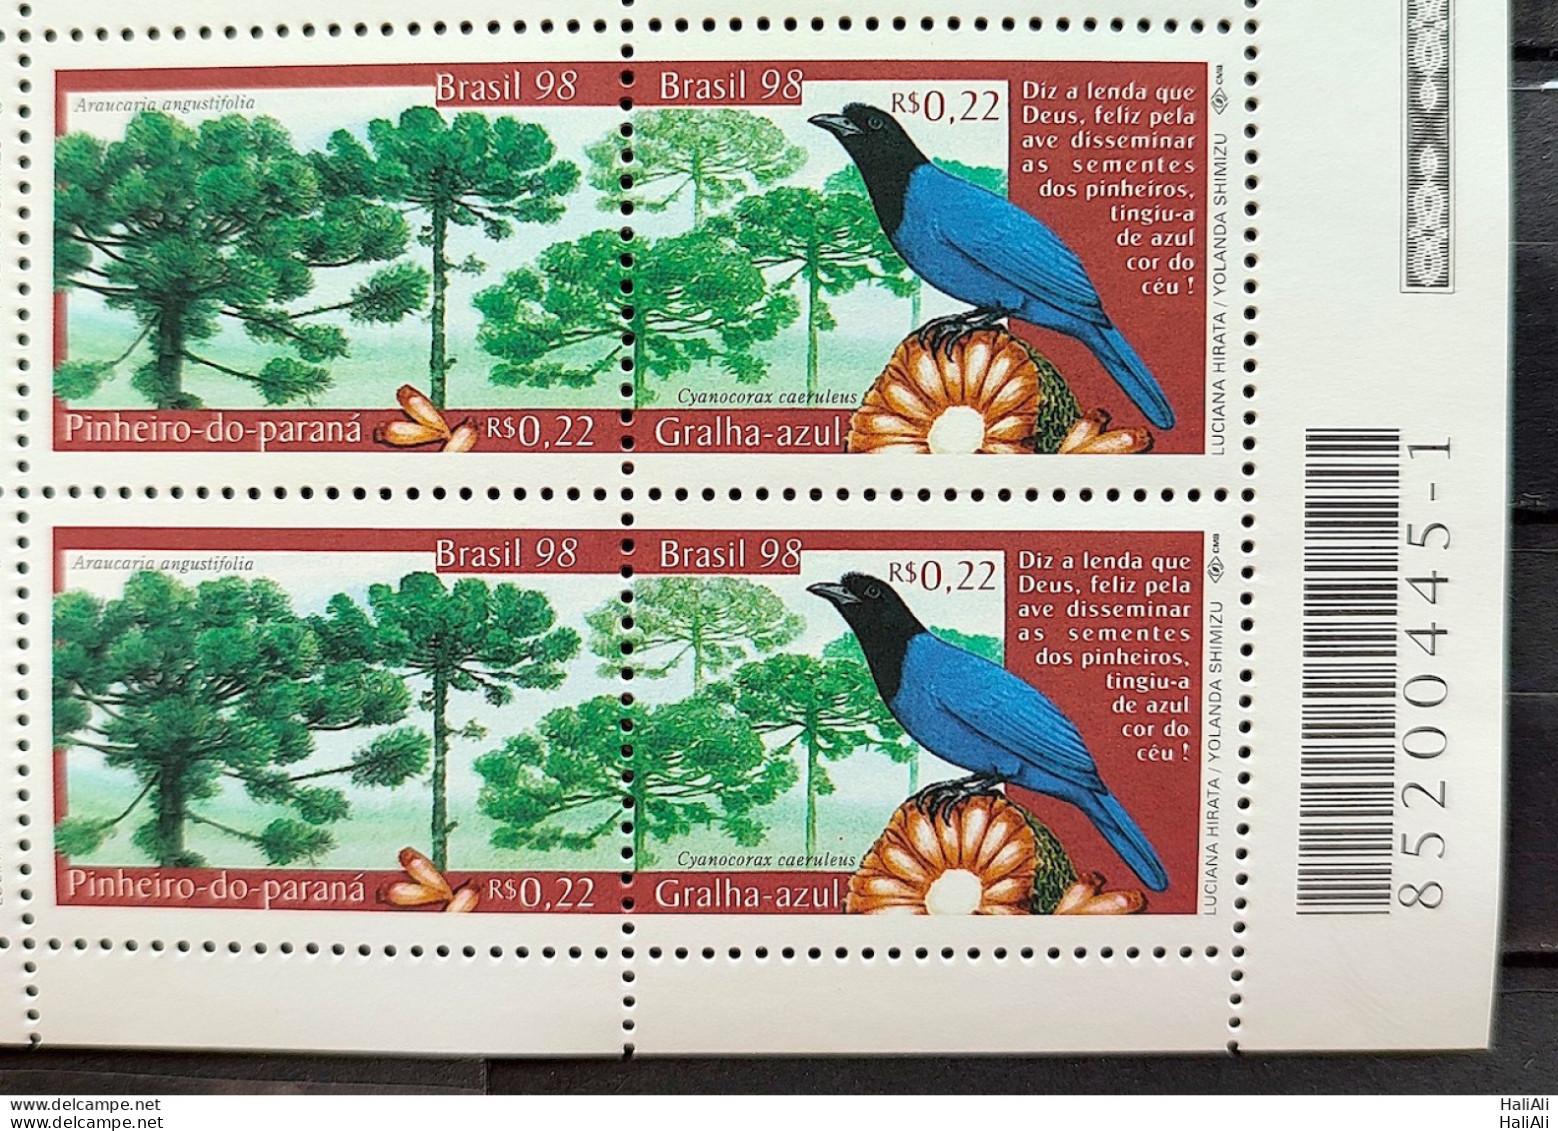 C 2138 Brazil Stamp Pinheiro Do Parana Blue Jay 1998 Block Of 4 Bar Code - Unused Stamps